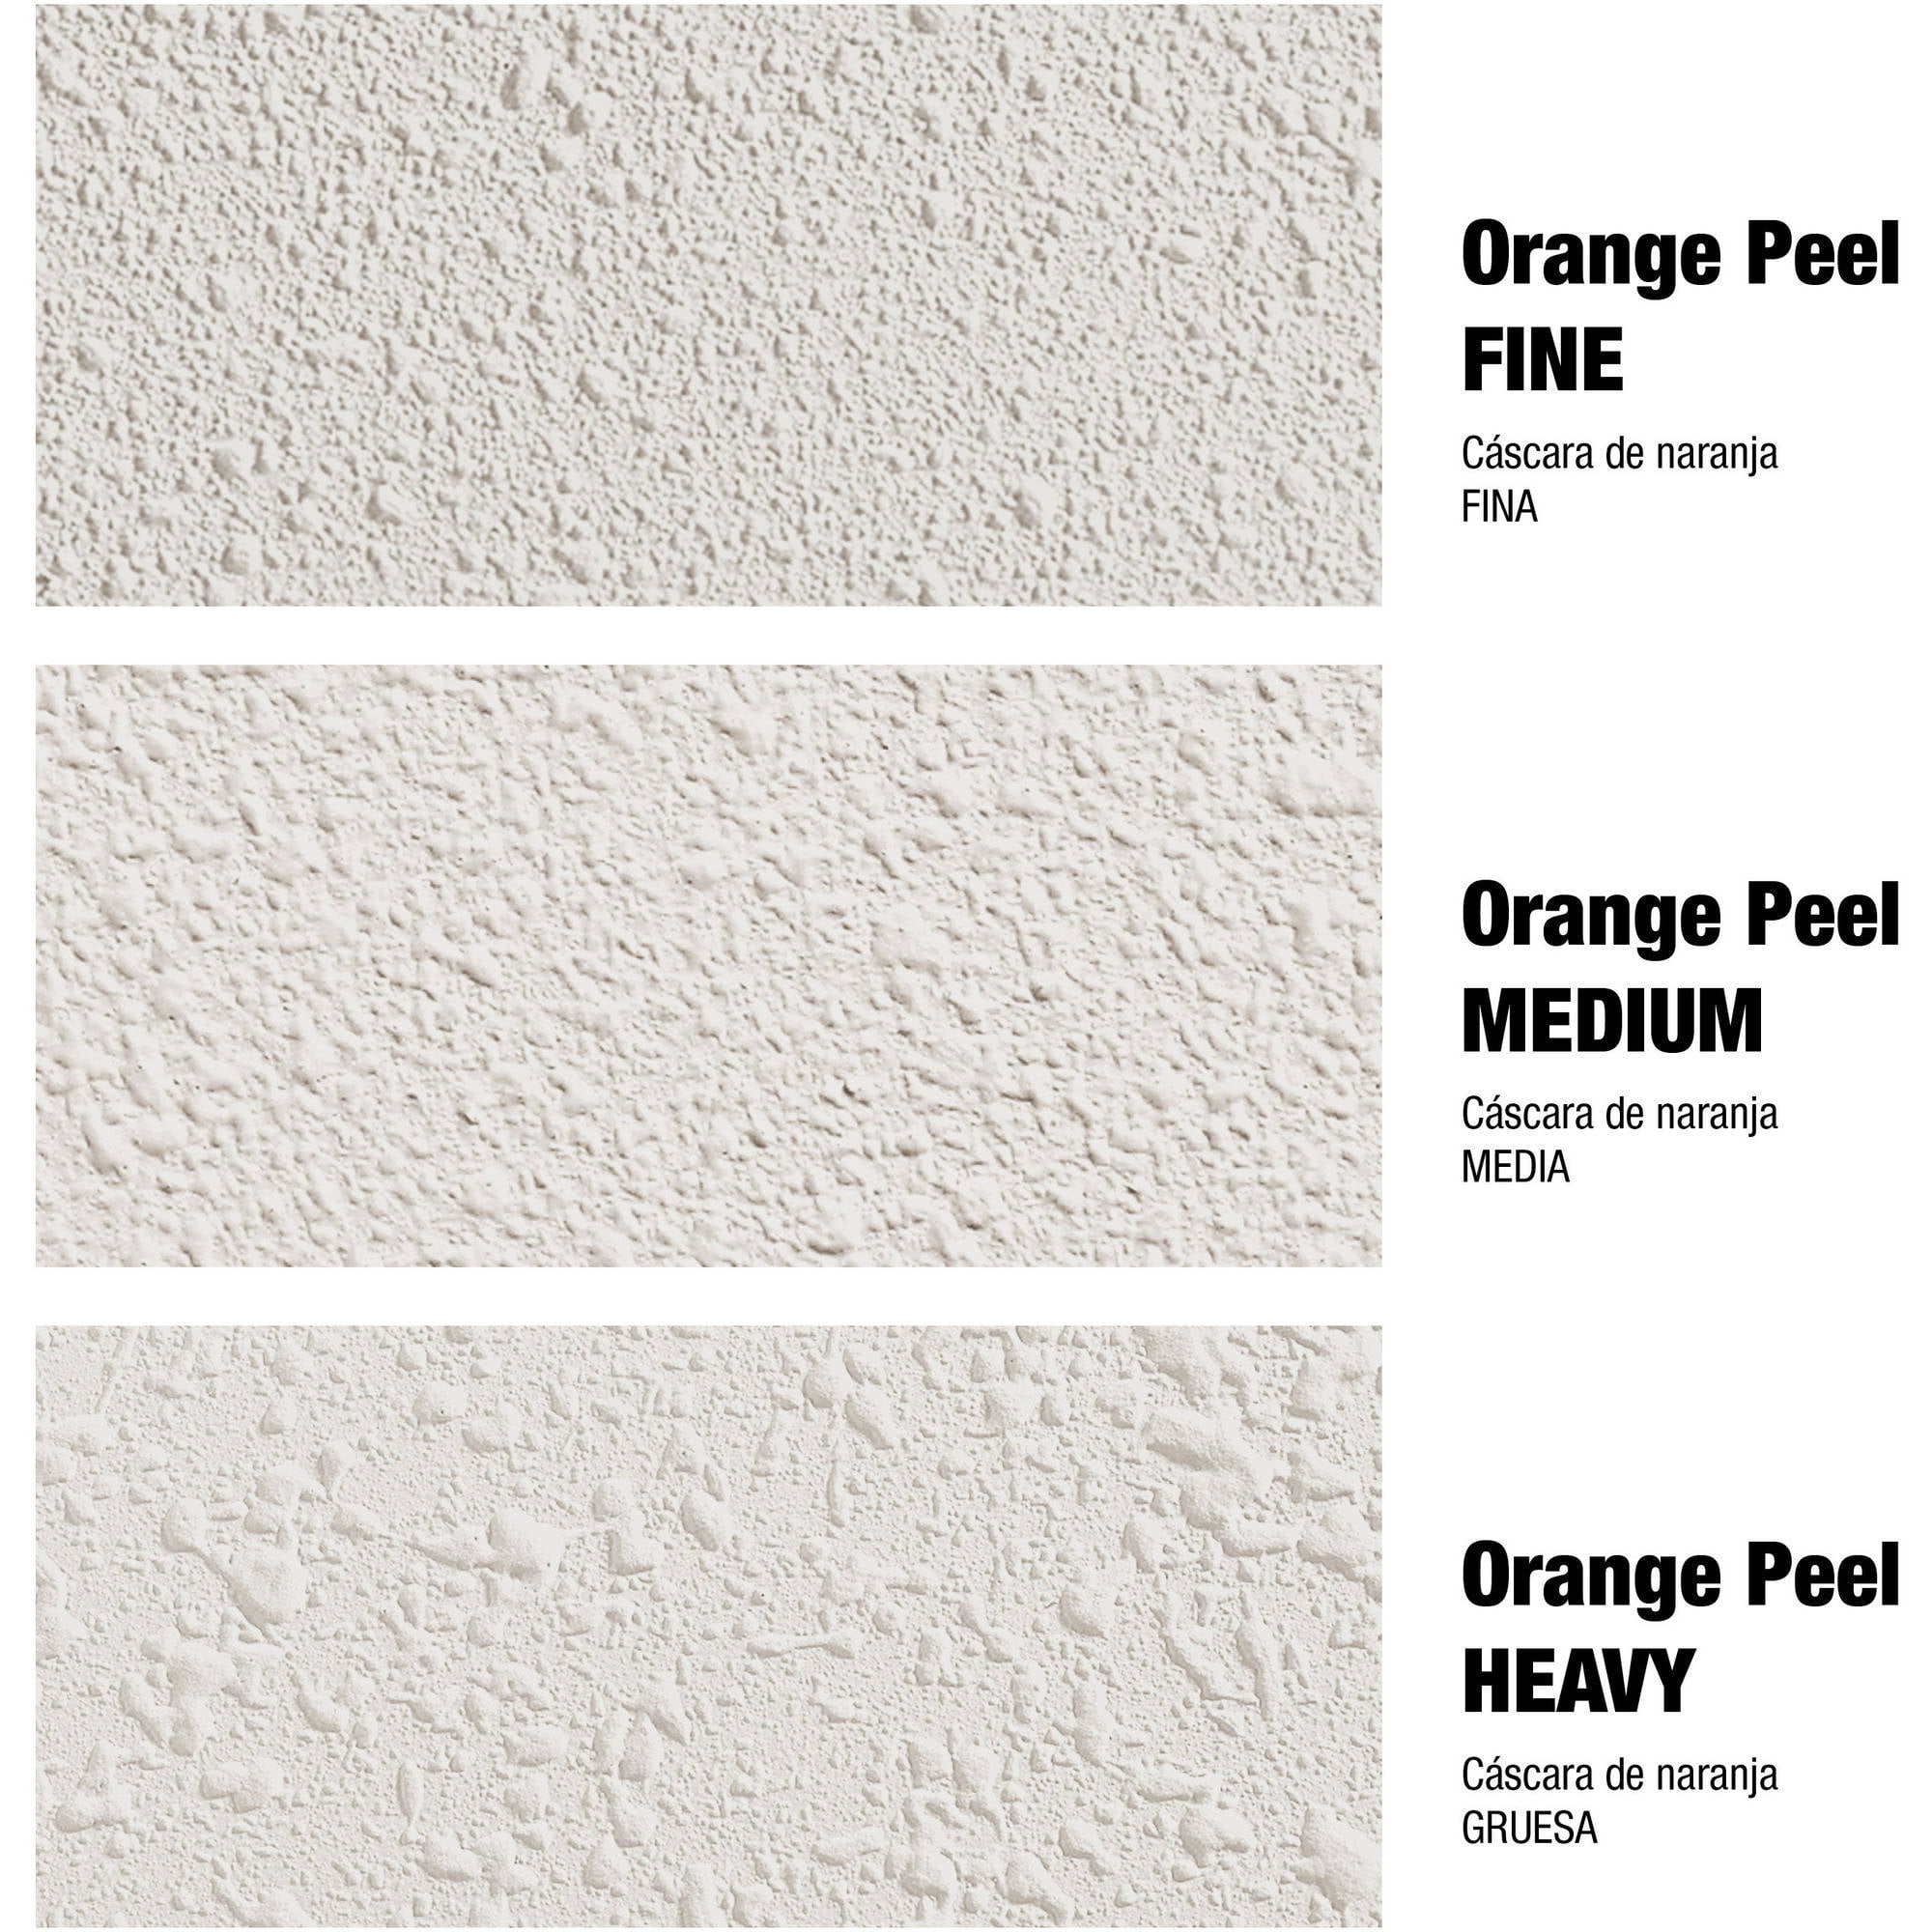 Homax Aerosol Wall Texture Oil Based Orange Peel 20oz Walmart Com